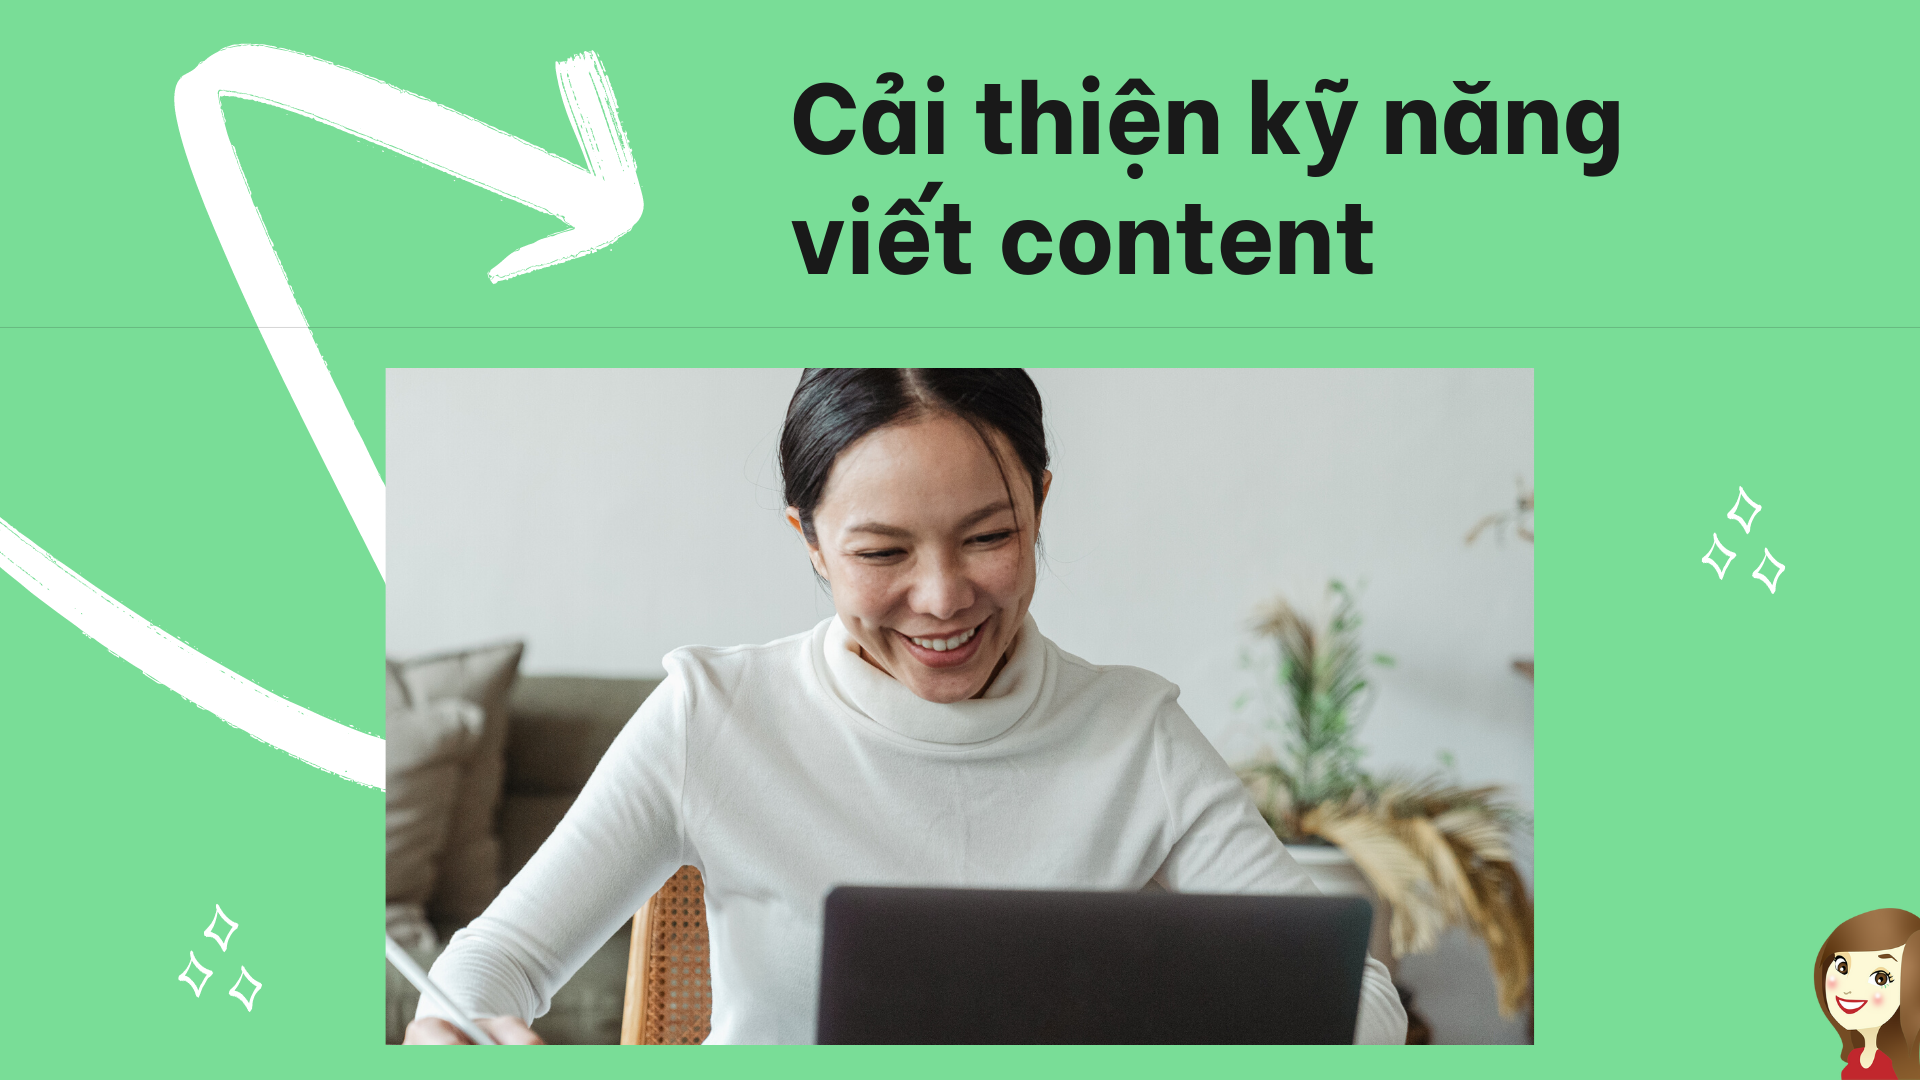 ky-nang-content-viet-bai-website-tu-a-den-z